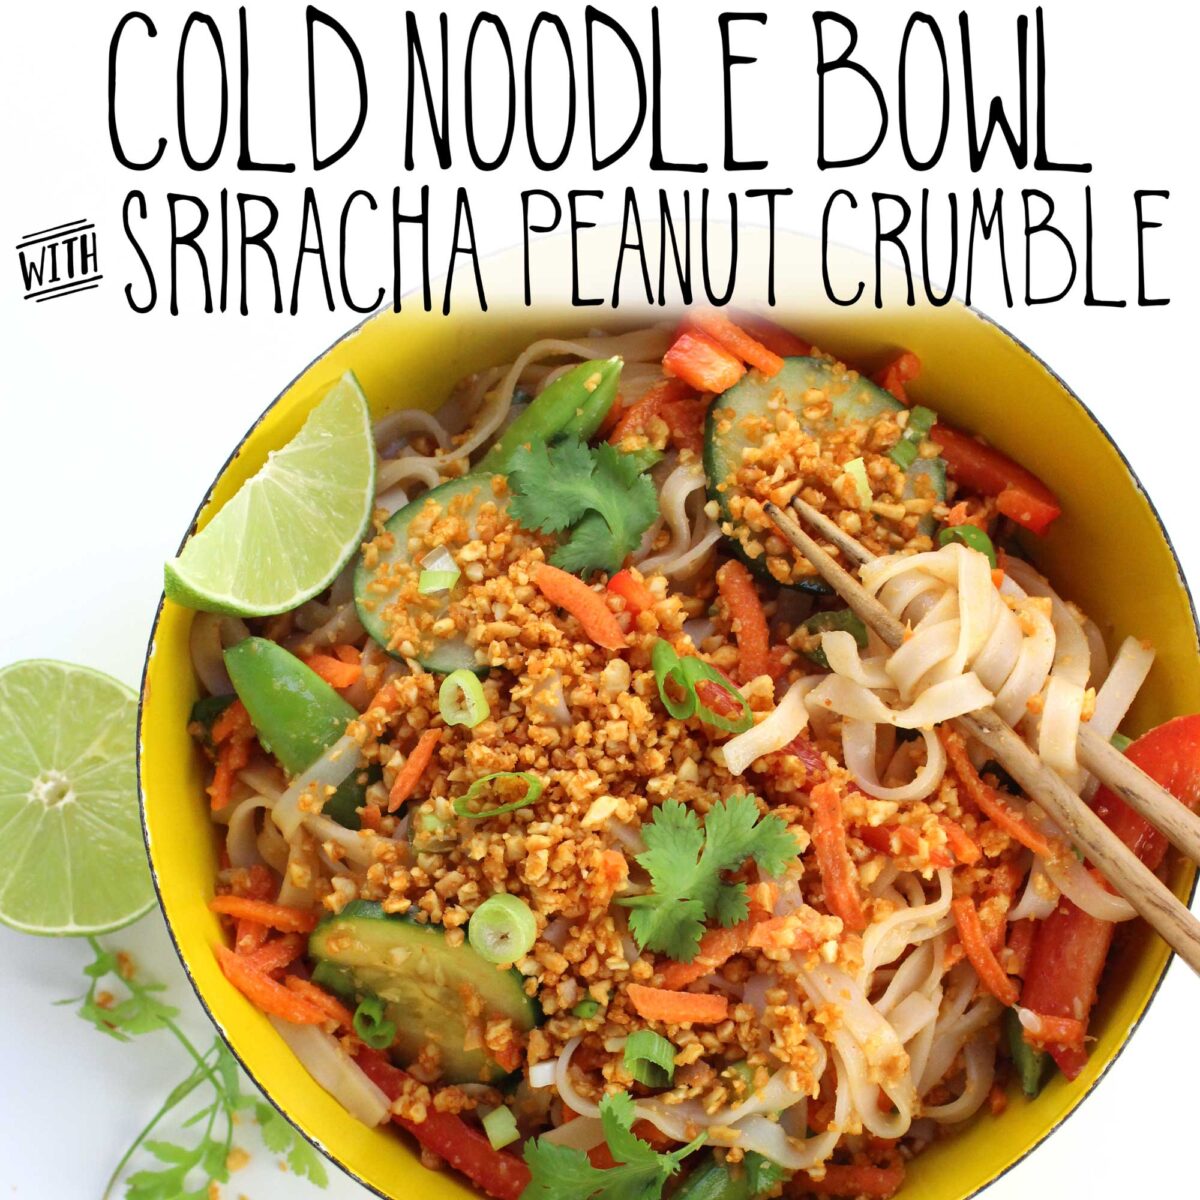 Cold Noodle Bowl with Sriracha Peanut Crumble